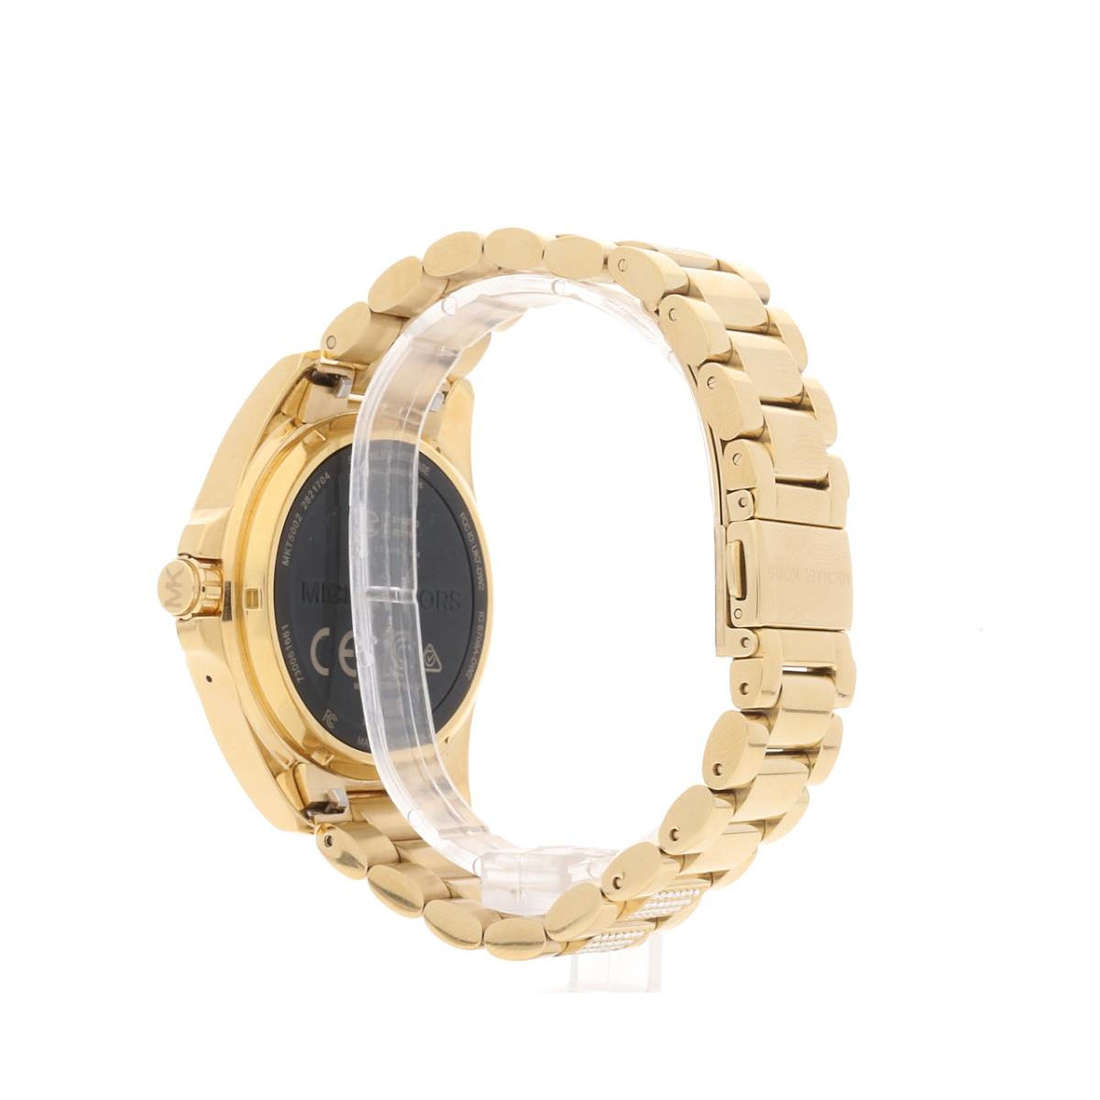 MICHAEL KORS ACCESS MKT5018 Smart Watch £60.00 - PicClick UK